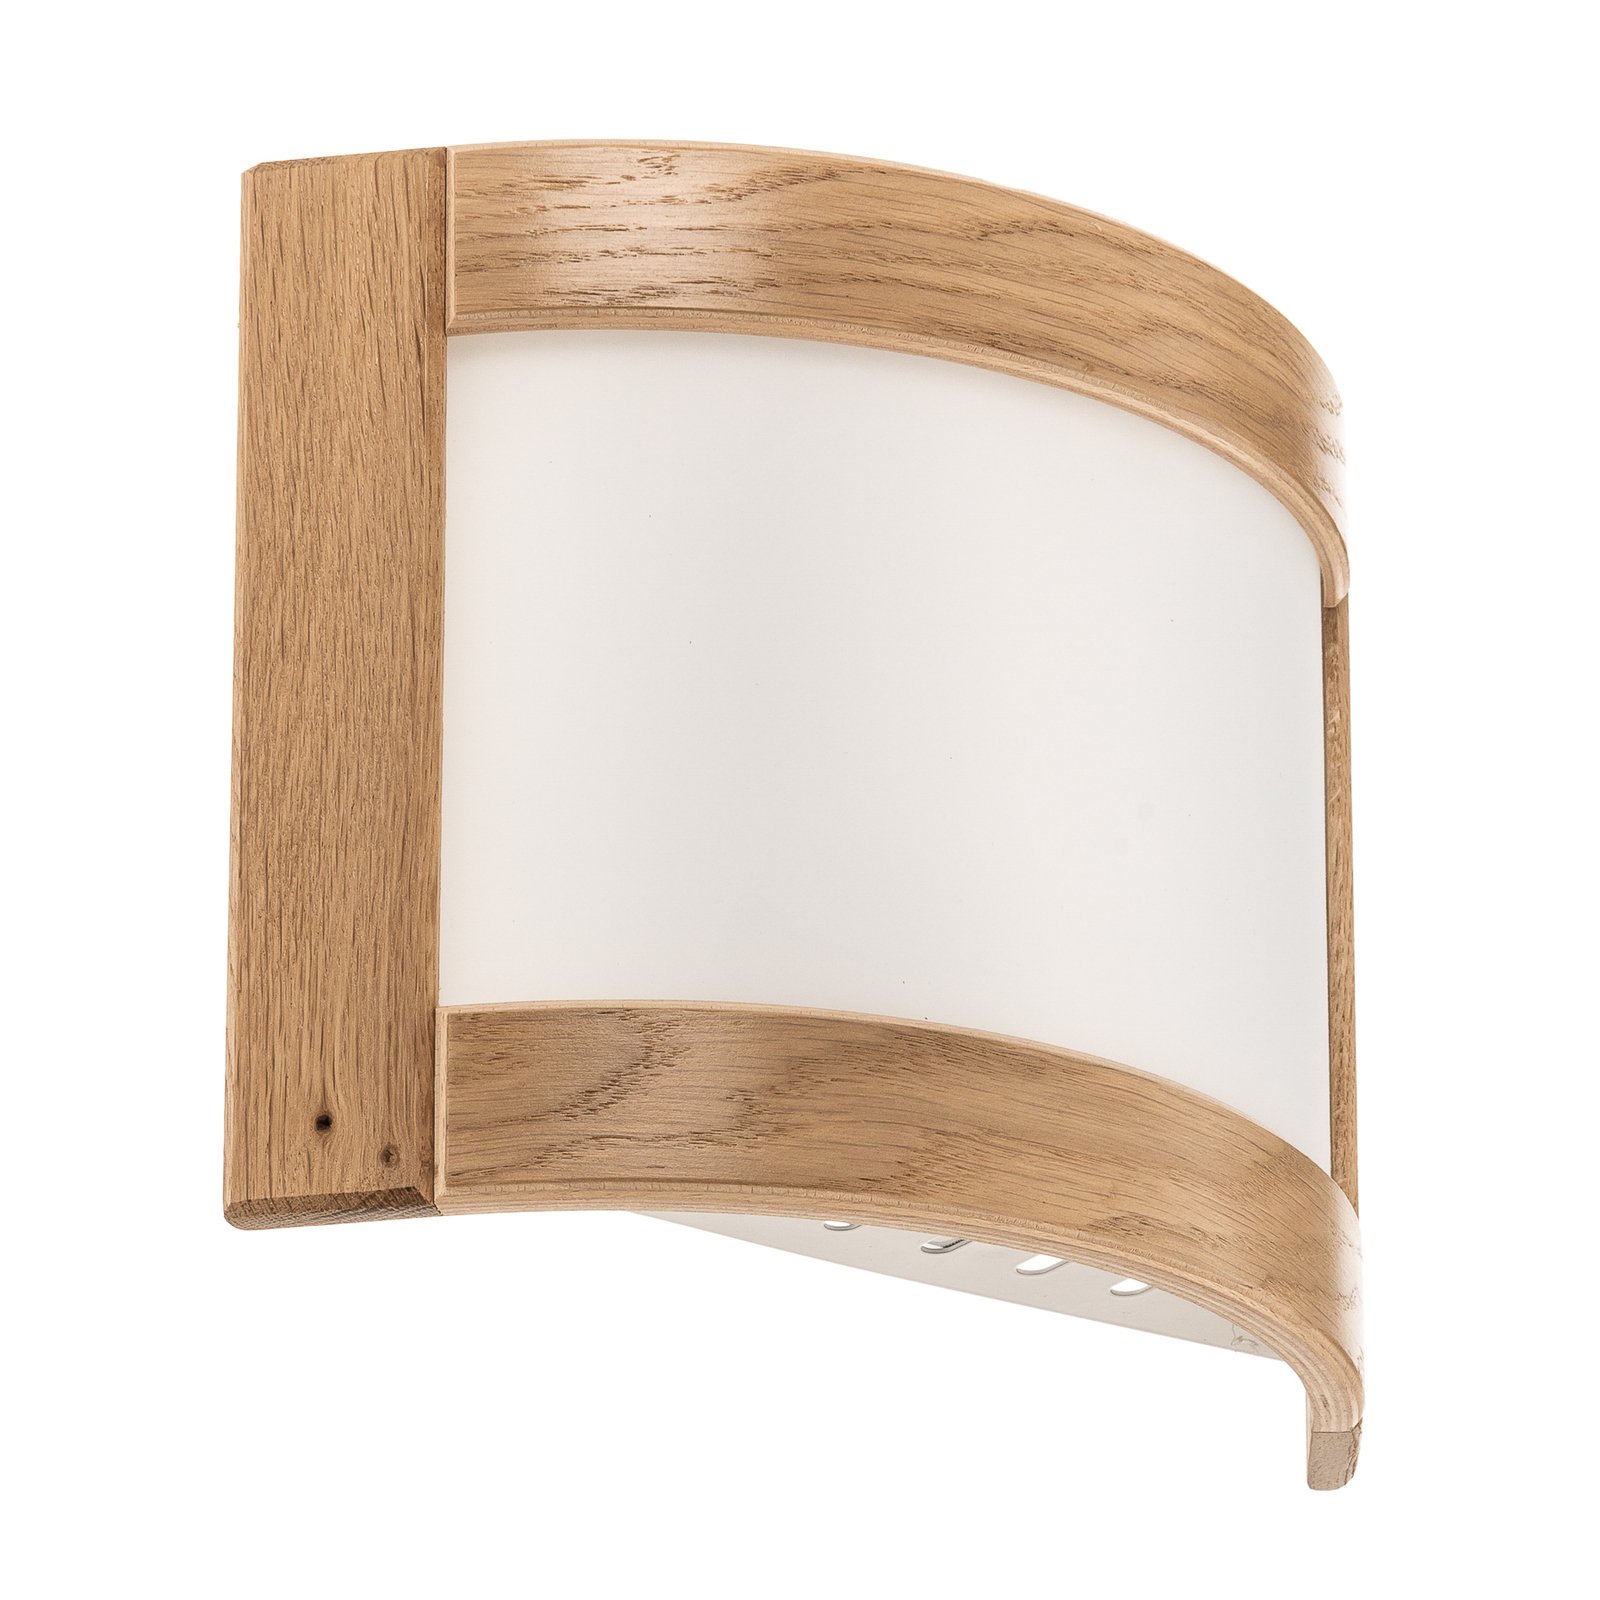 Zanna wall light, wood, height 22 cm light oak